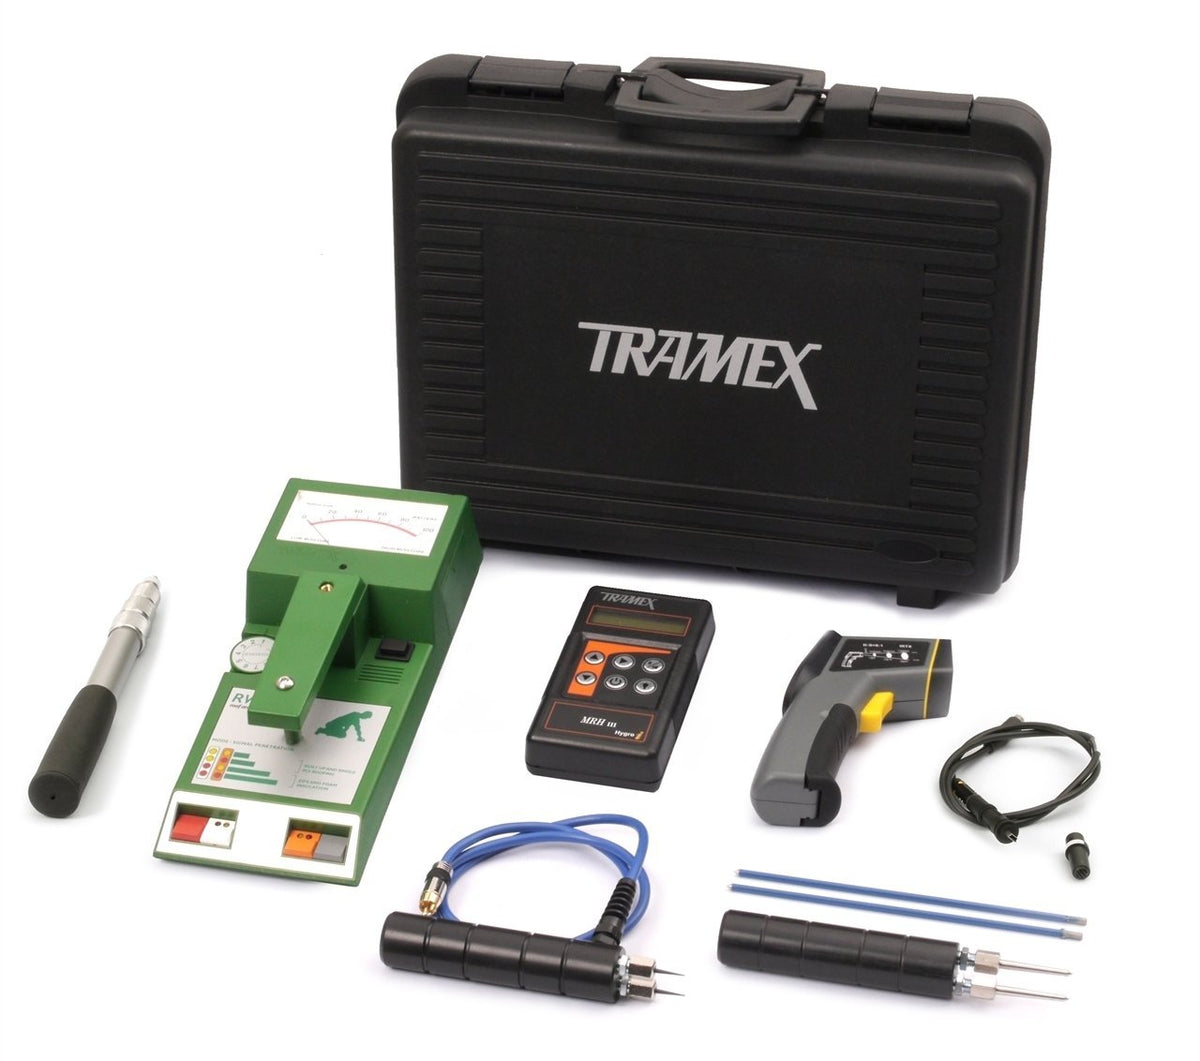 Tramex EIFS External Insulation Finishing Systems Inspection Kit - MIZA